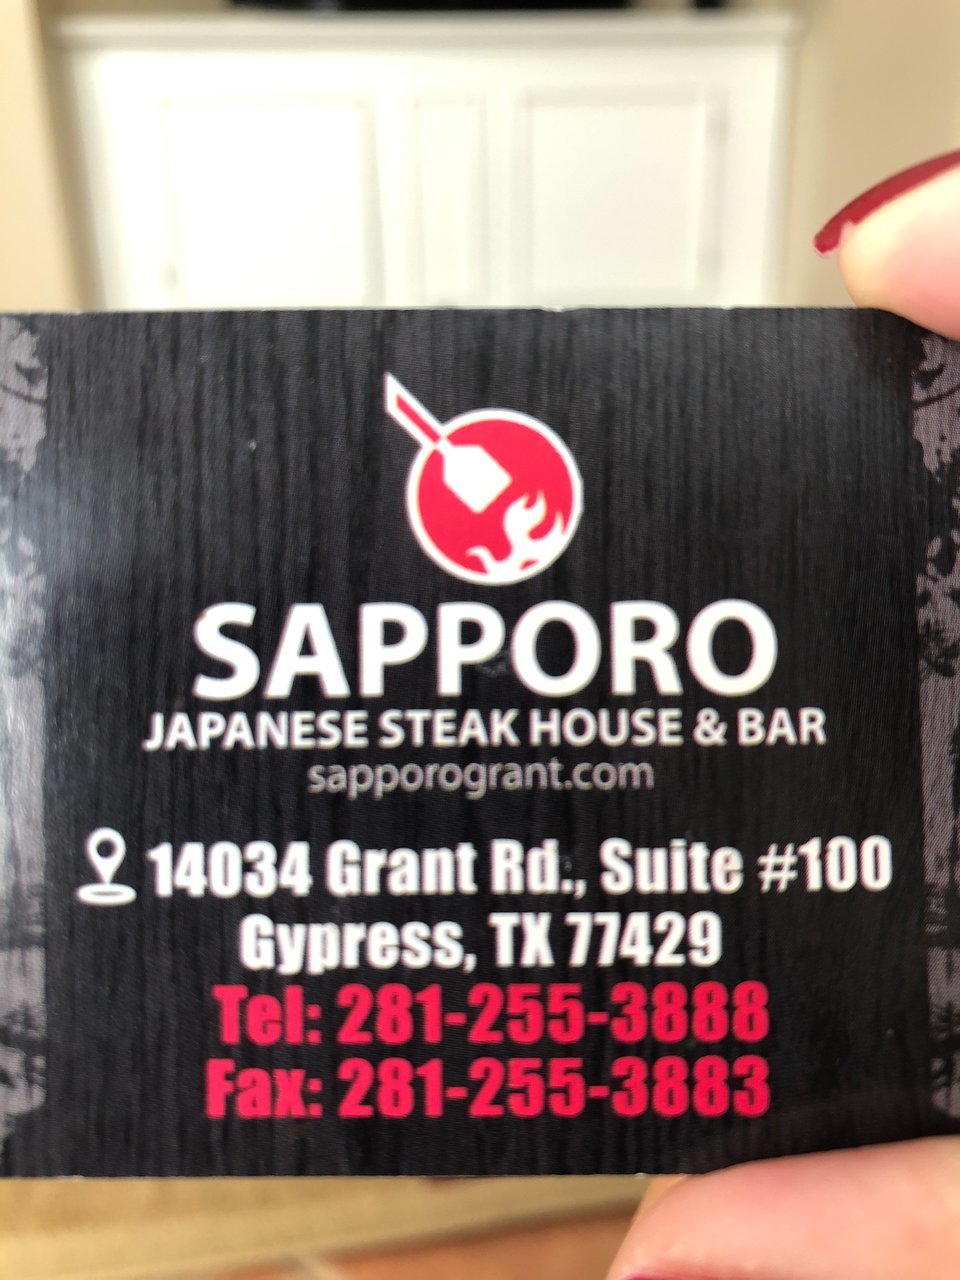 Sapporo Japanese steak house & bar